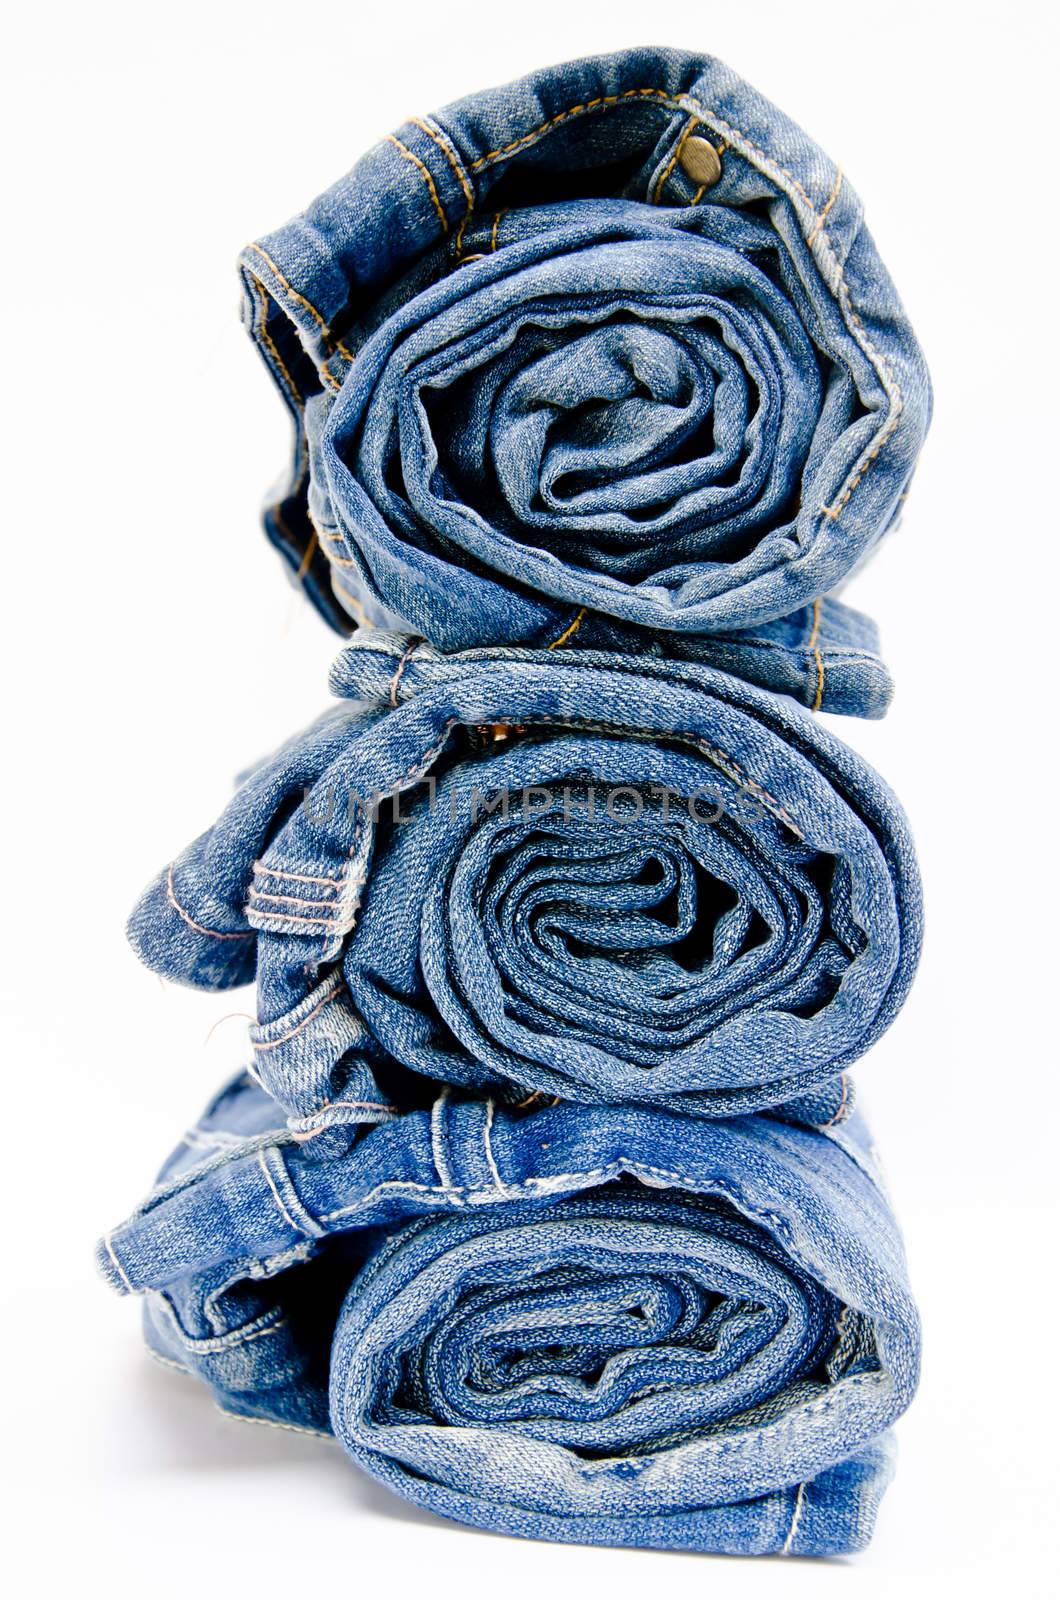 roll blue denim jeans arranged in stack by Gamjai